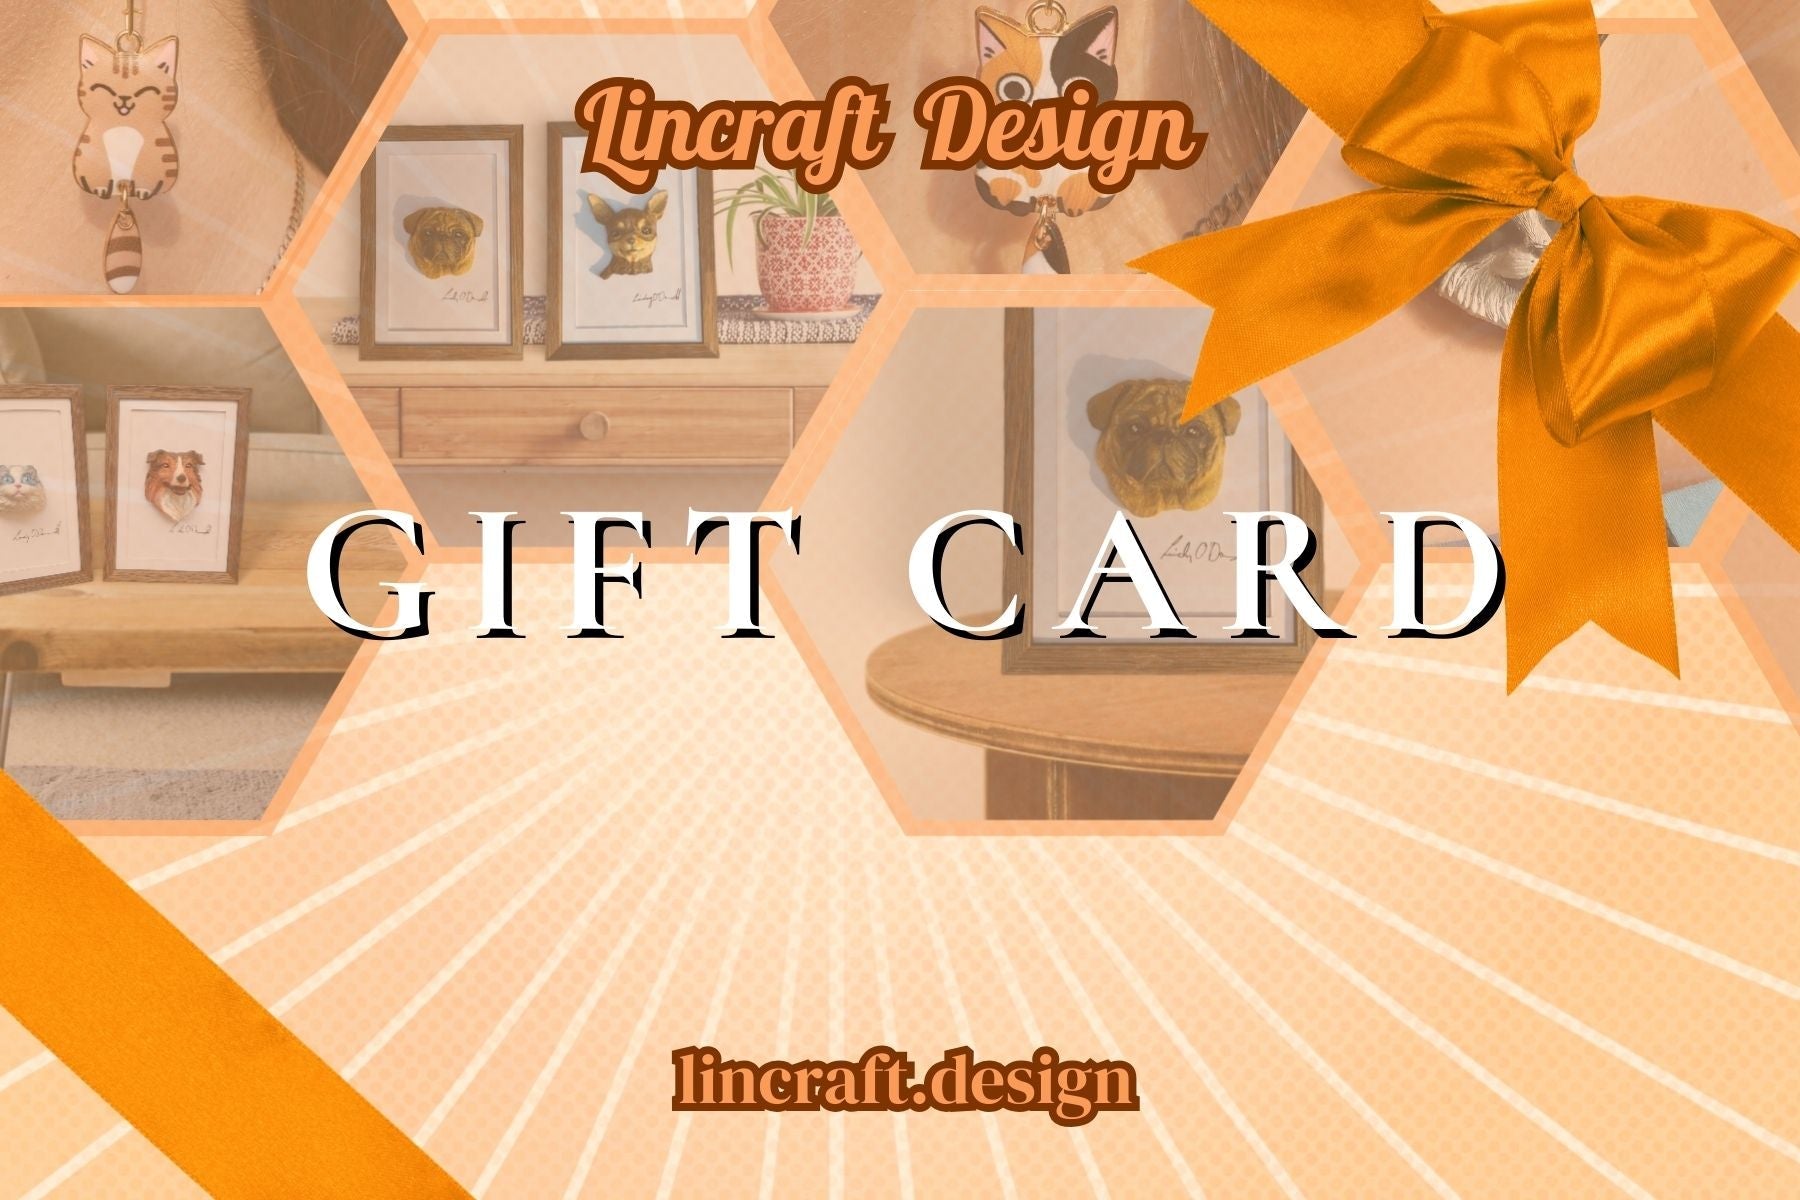 Lincraft Design Gift Card - Lincraft Design